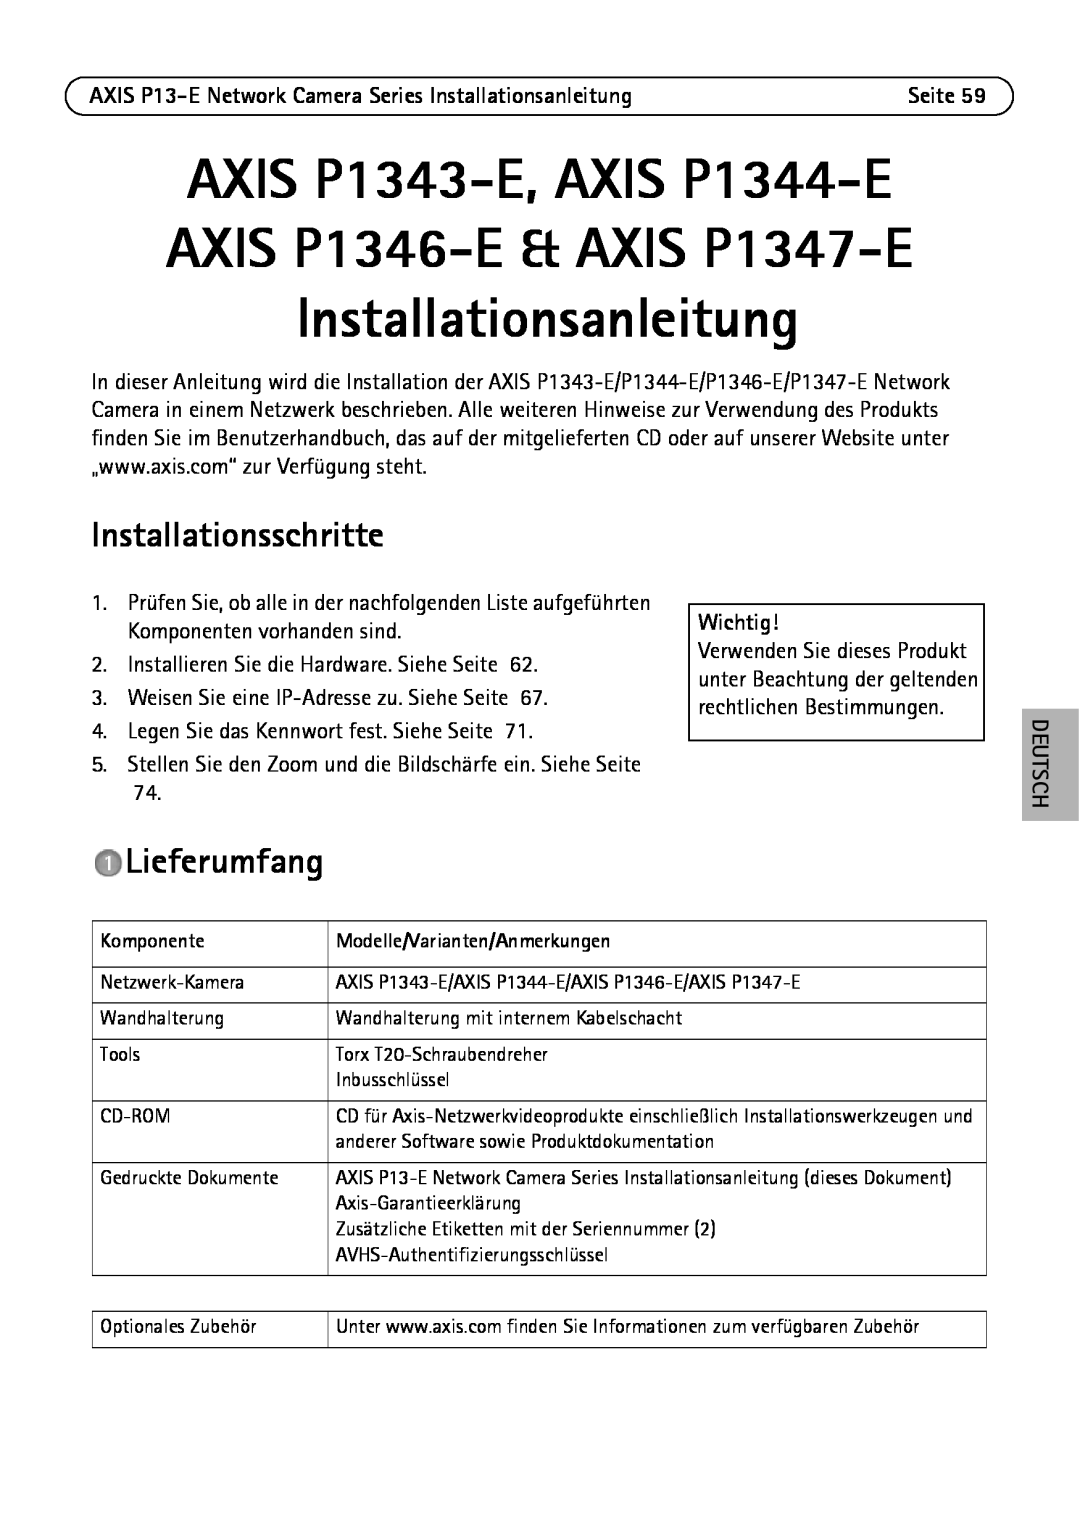 Axis Communications P13-E Installationsschritte, Lieferumfang, Wichtig, Deutsch, Komponente, Modelle/Varianten/Anmerkungen 